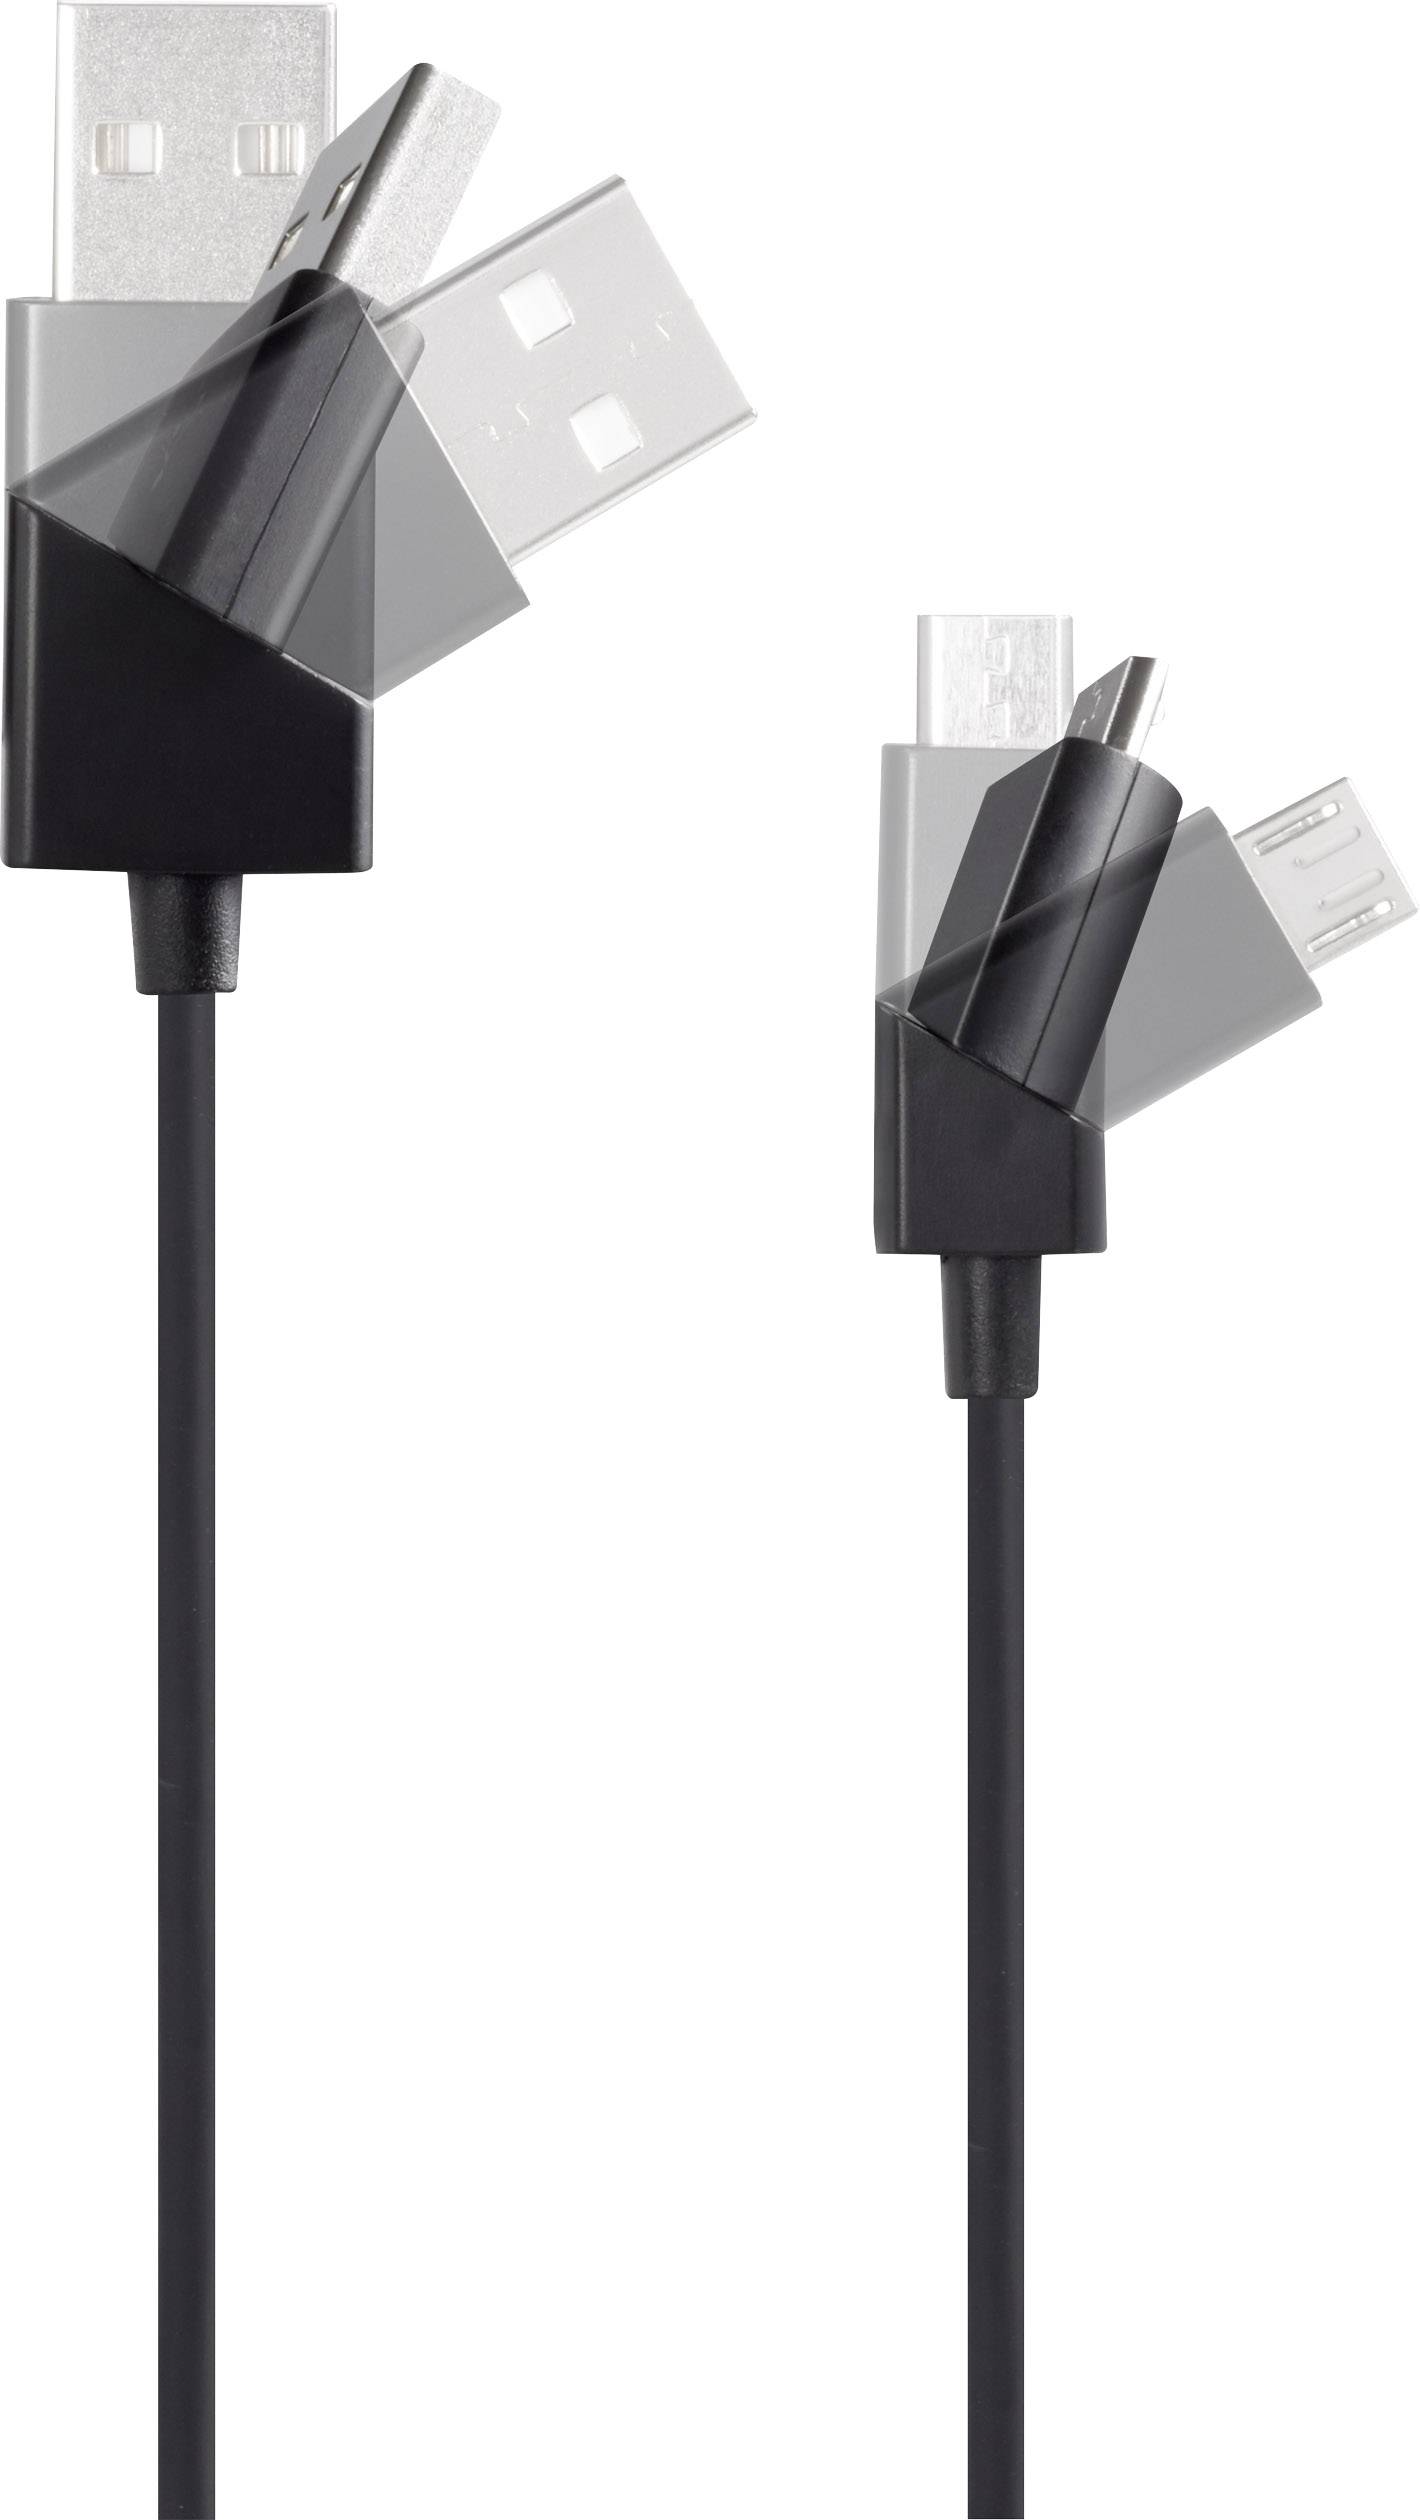 RENKFORCE USB 2.0 Anschlusskabel [1x USB 2.0 Stecker A - 1x USB 2.0 Stecker Micro-B] 1 m